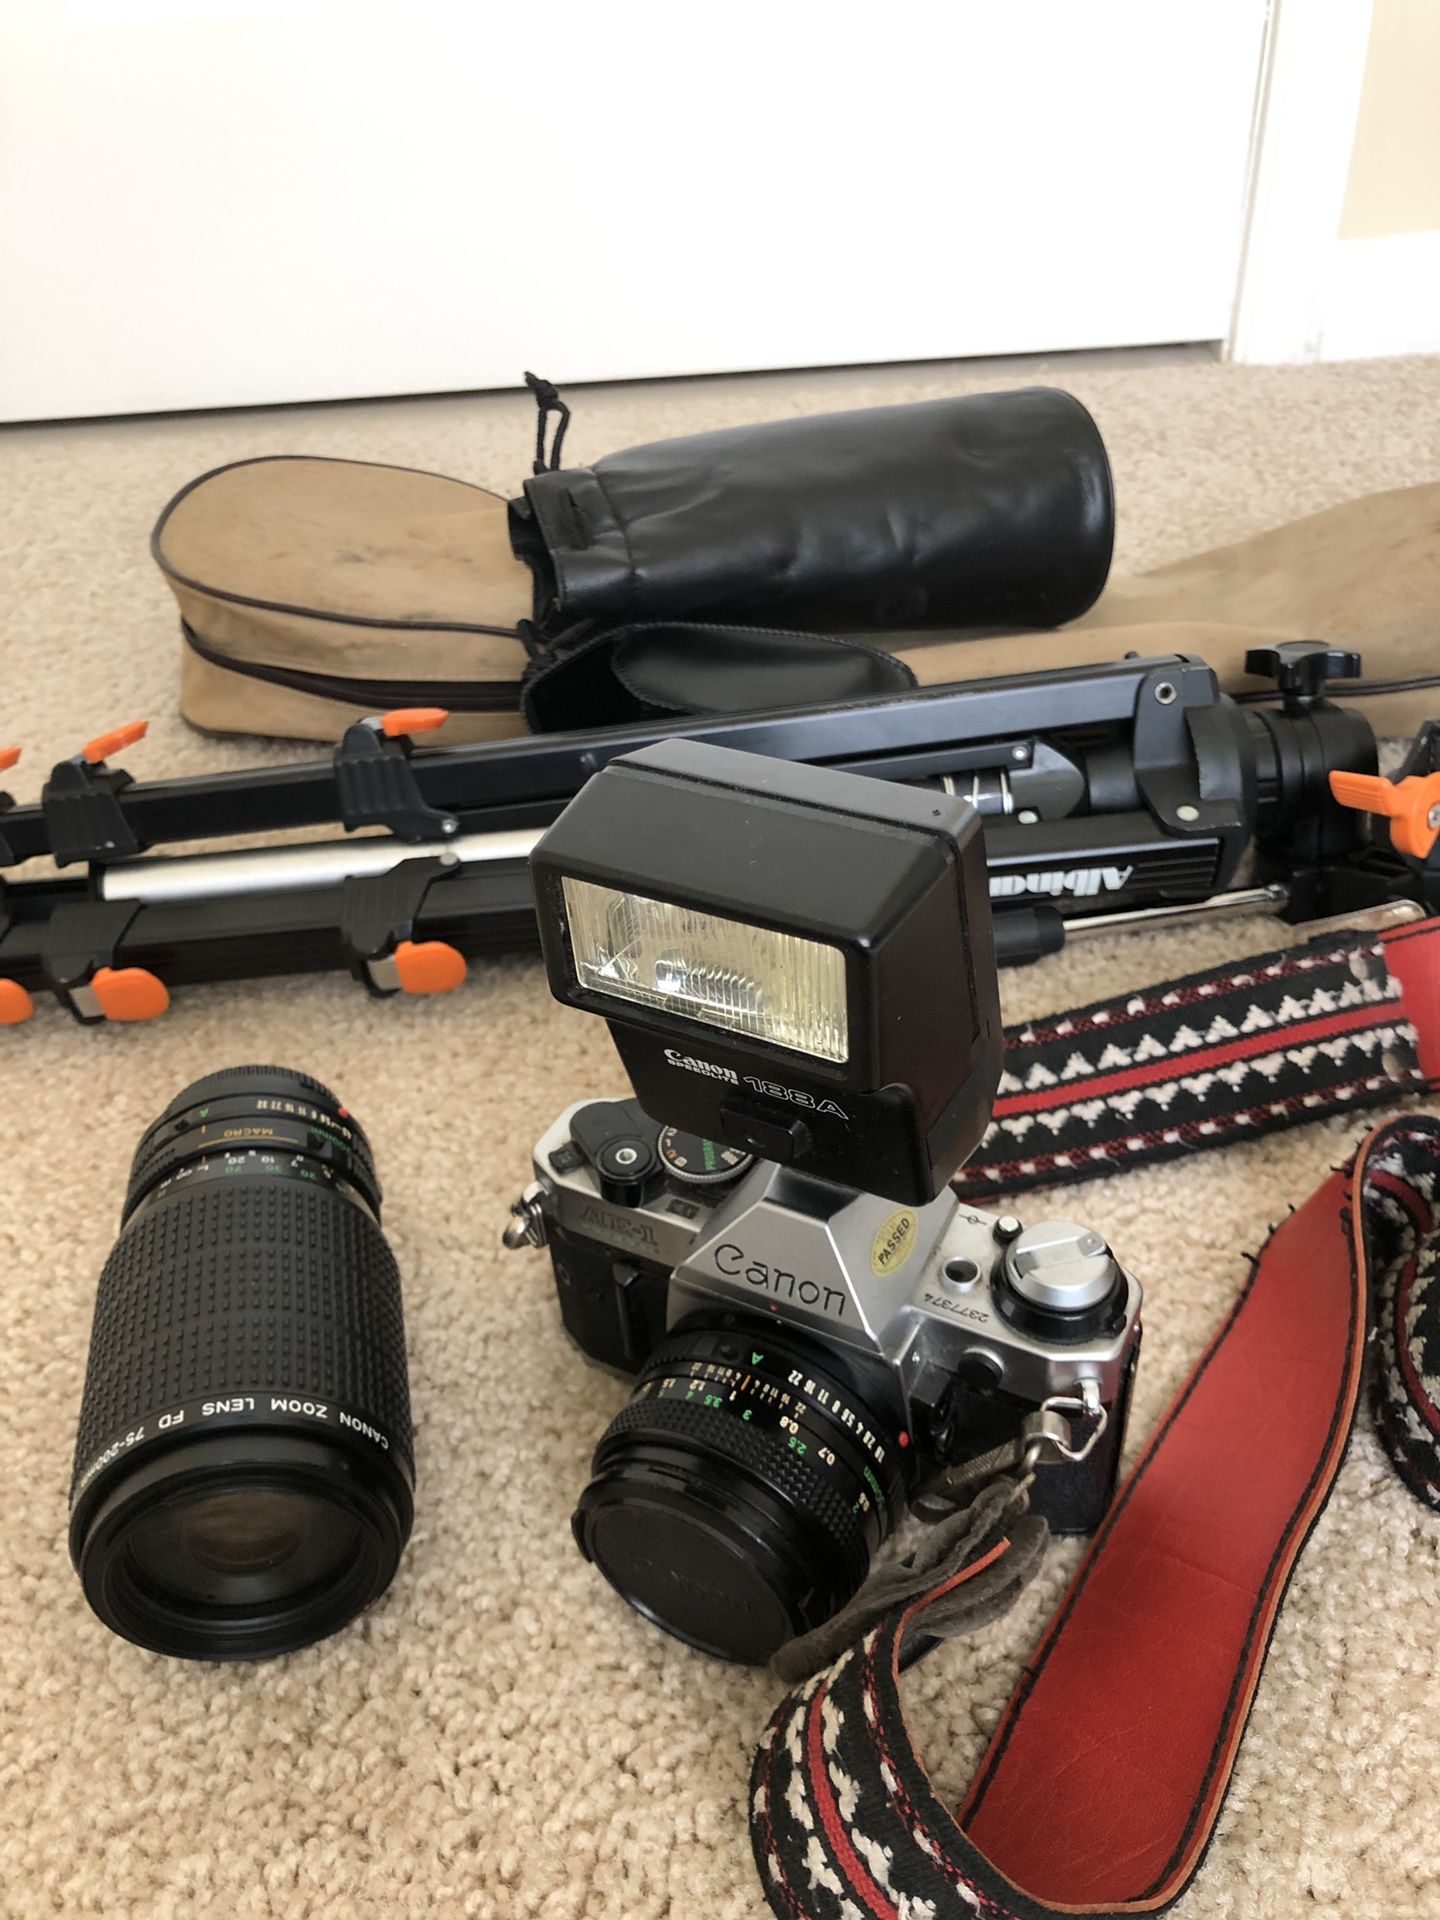 Cannon AE1 Photographer Set